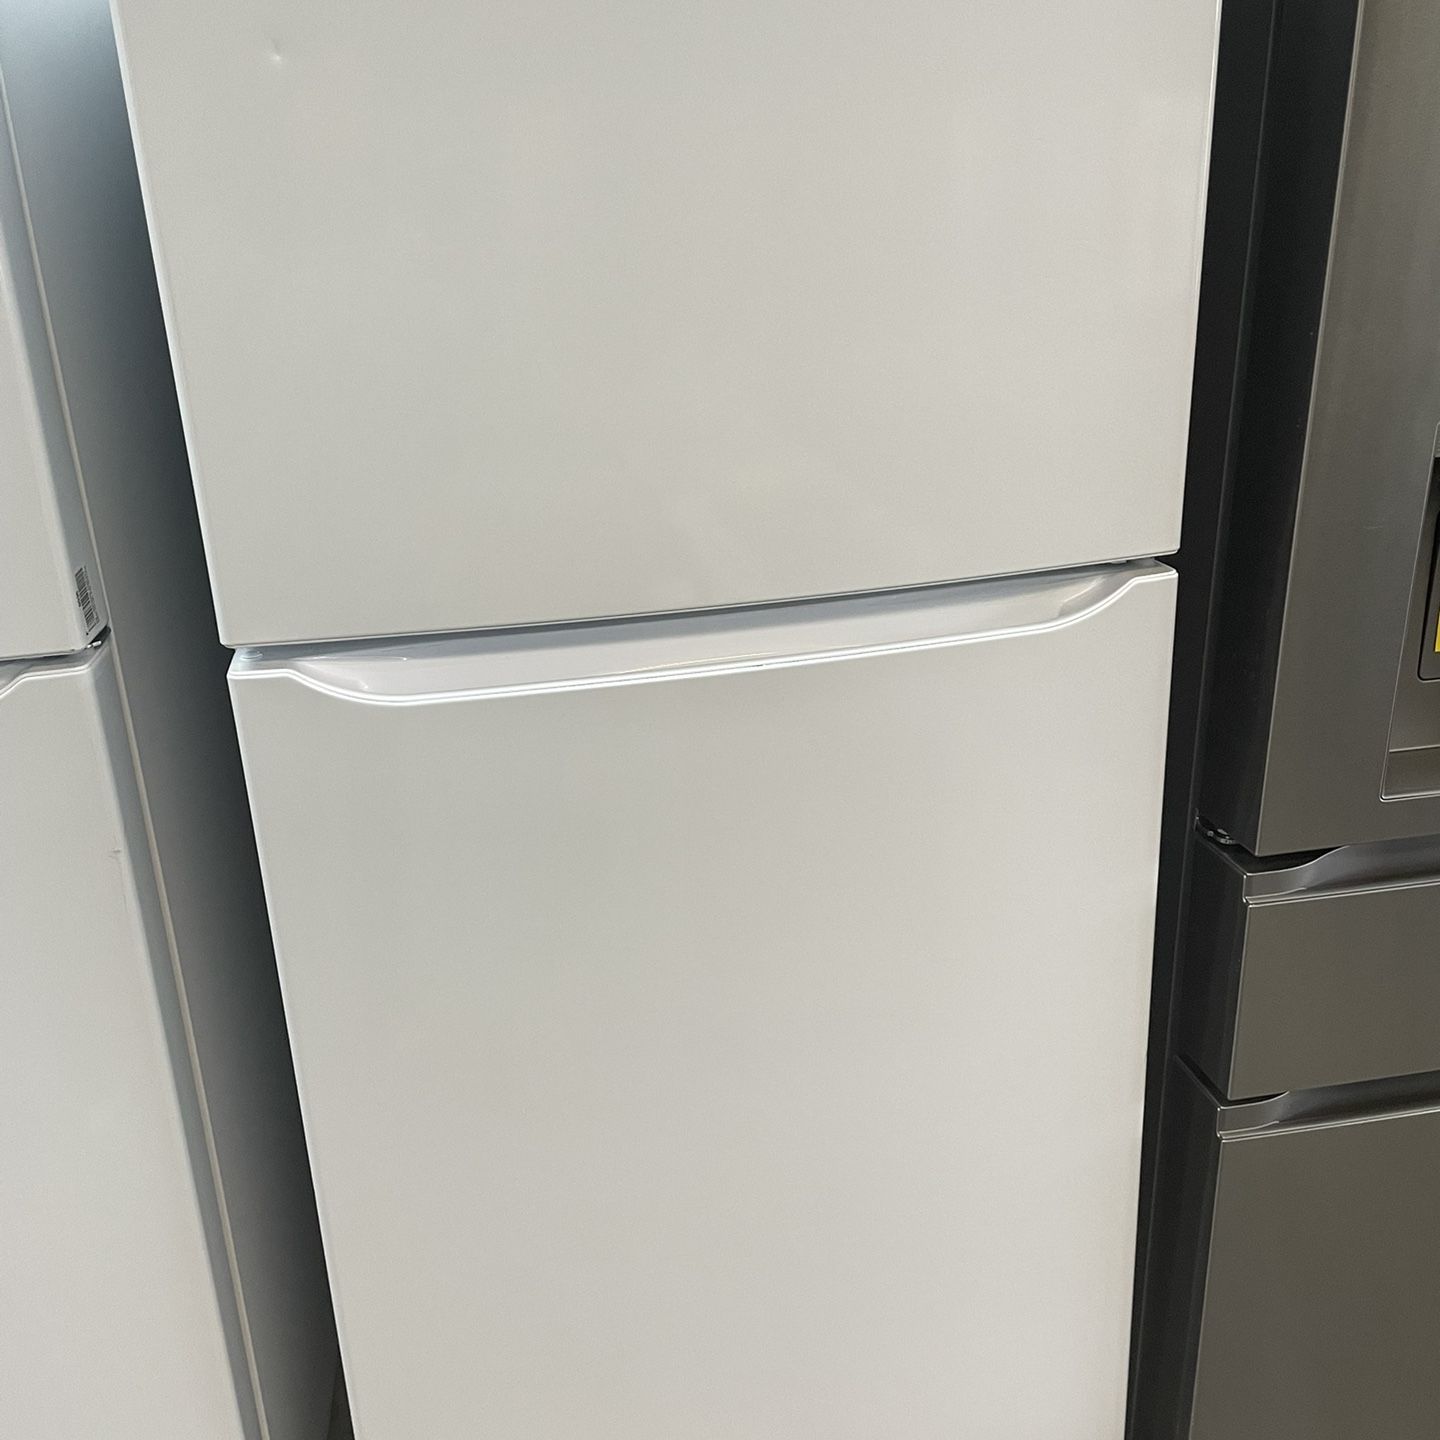 LG Top Freezer Refrigerator 